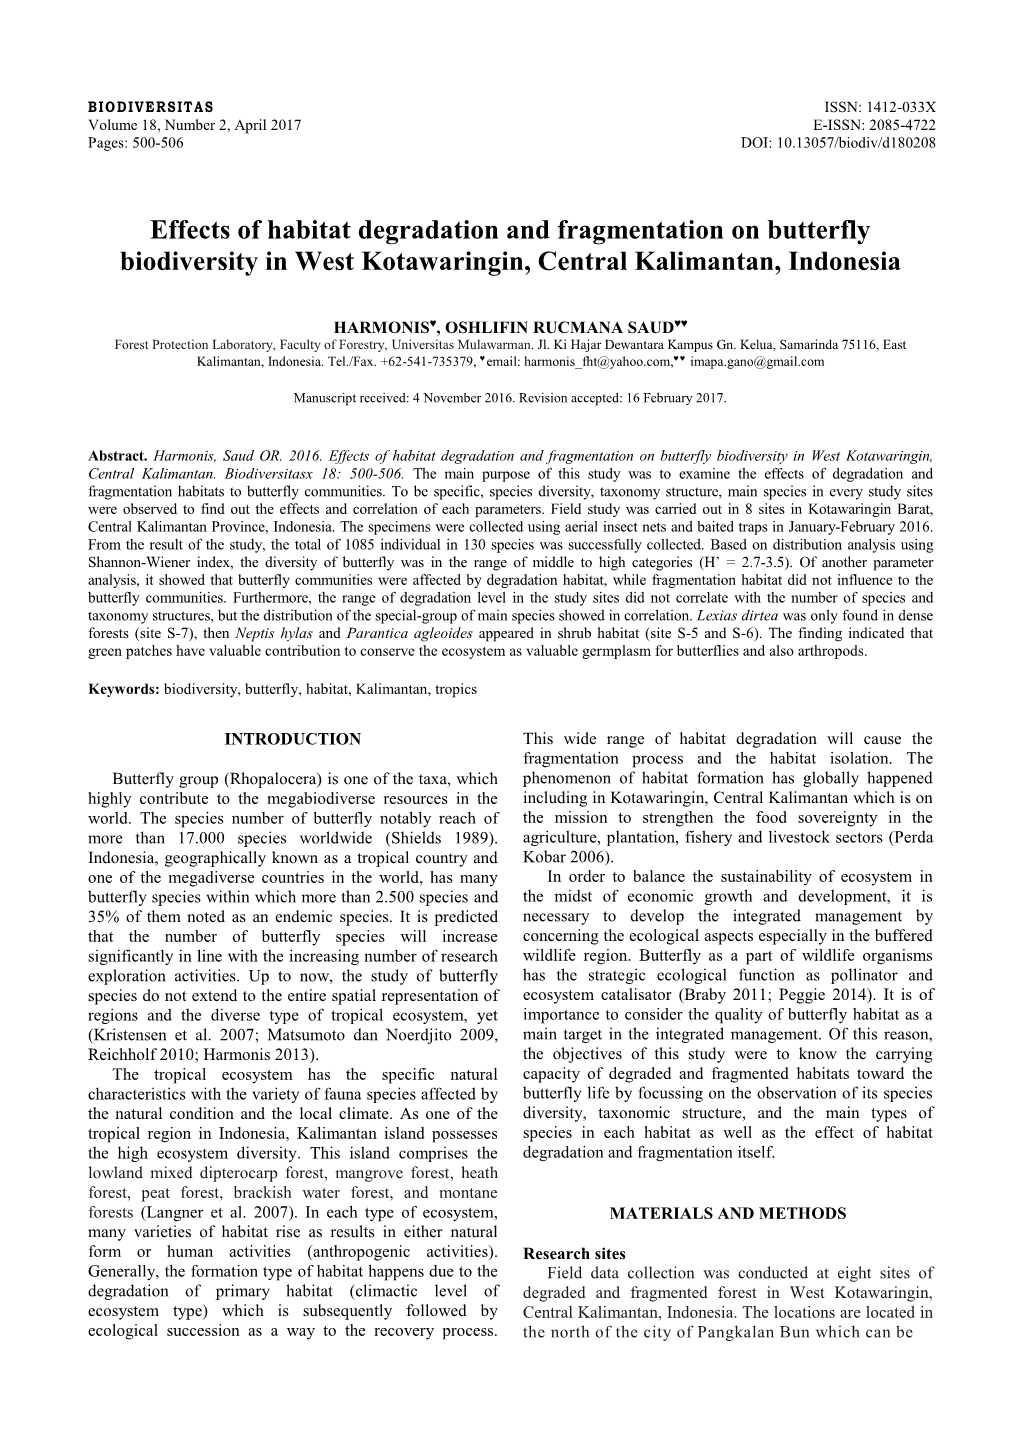 Effects of Habitat Degradation and Fragmentation on Butterfly Biodiversity in West Kotawaringin, Central Kalimantan, Indonesia